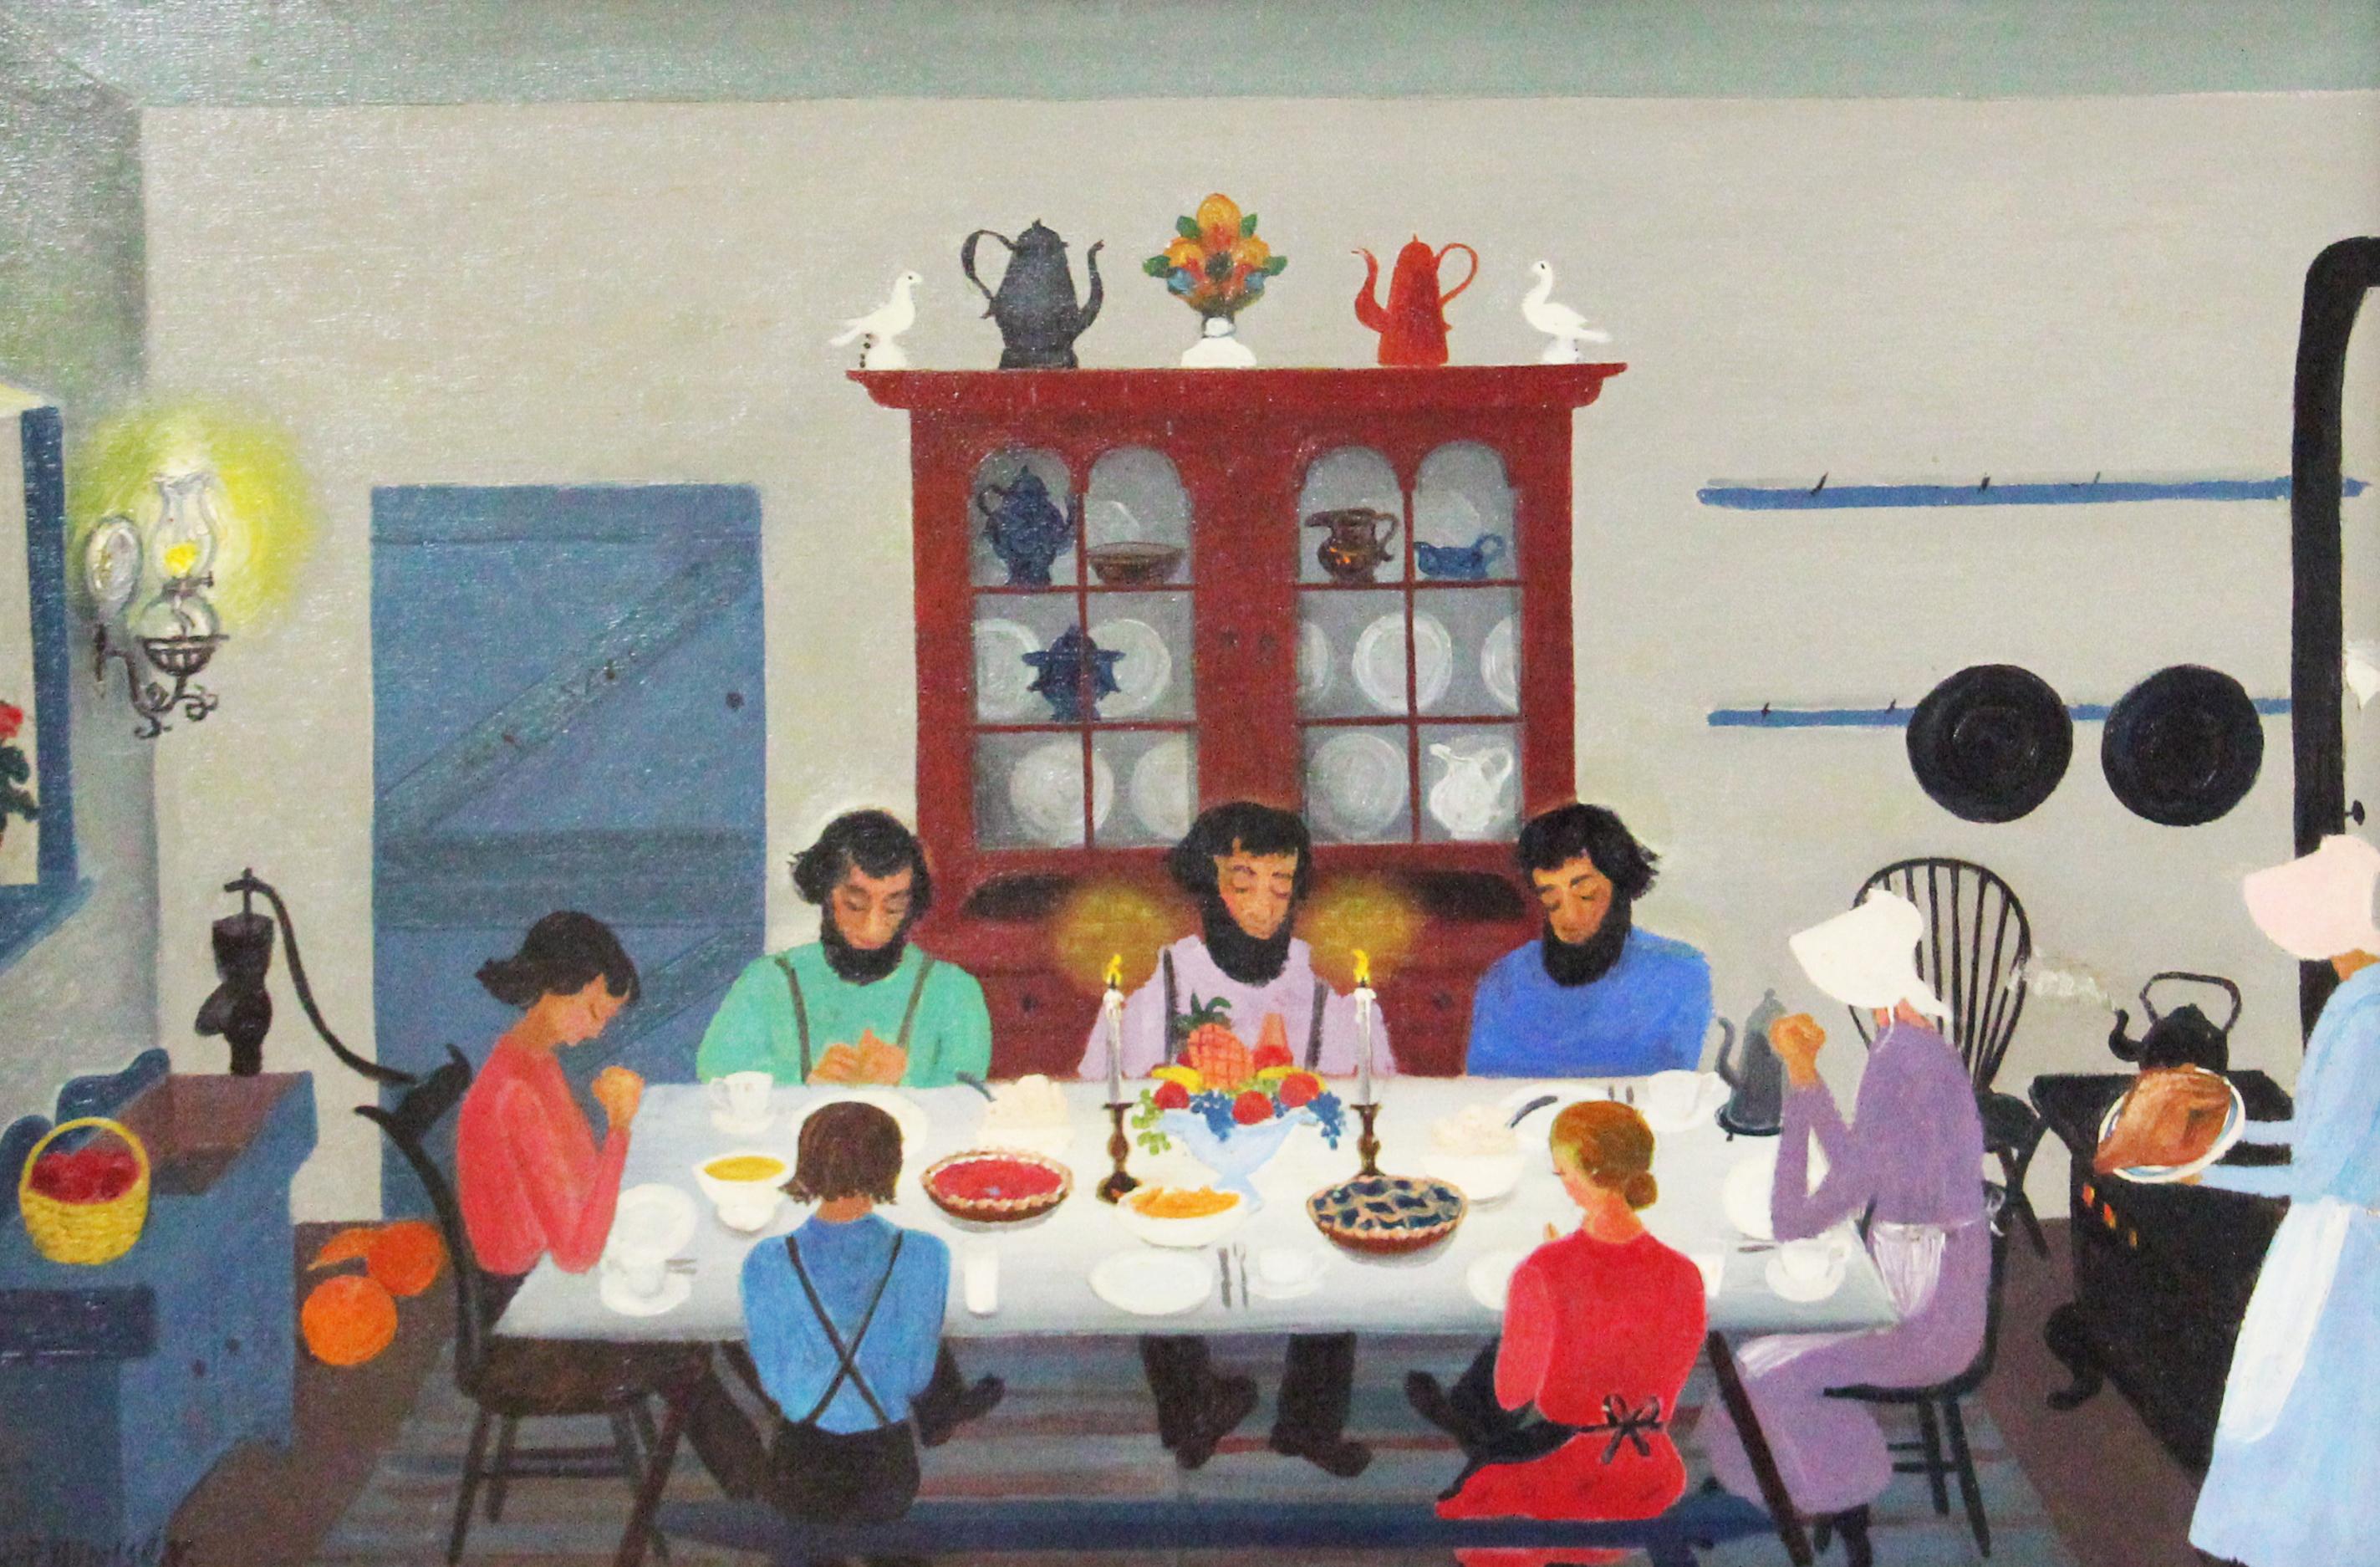 David Ellinger Figurative Painting - Love Feast, Folk Art Family Scene, Amish Farm Life in Pennsylvania Dutch Style